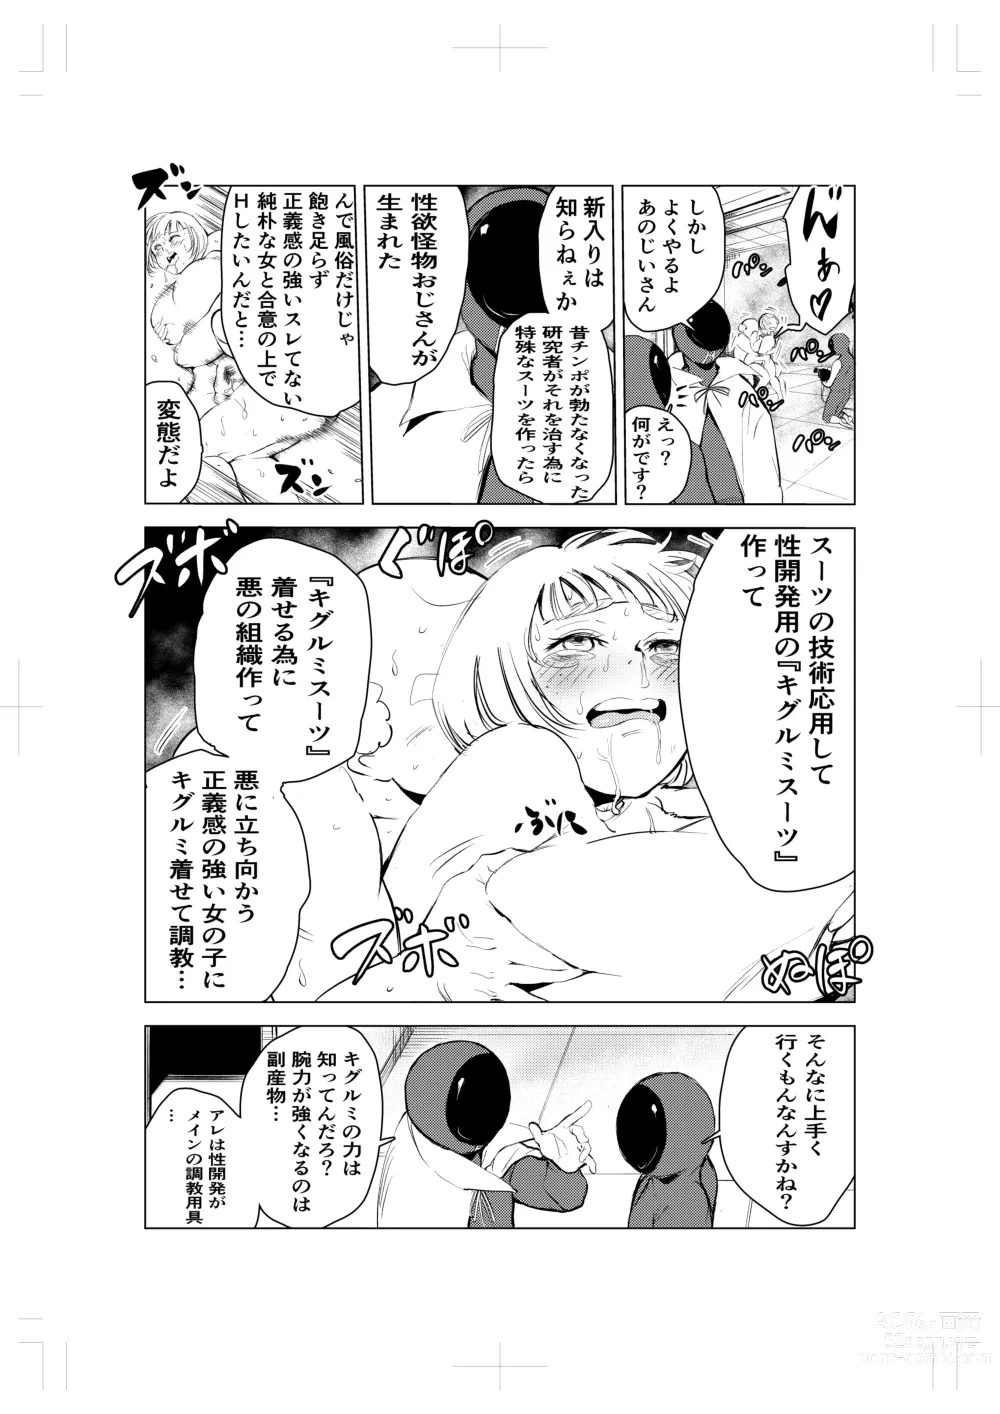 Page 30 of doujinshi Kigurumi niku manjū